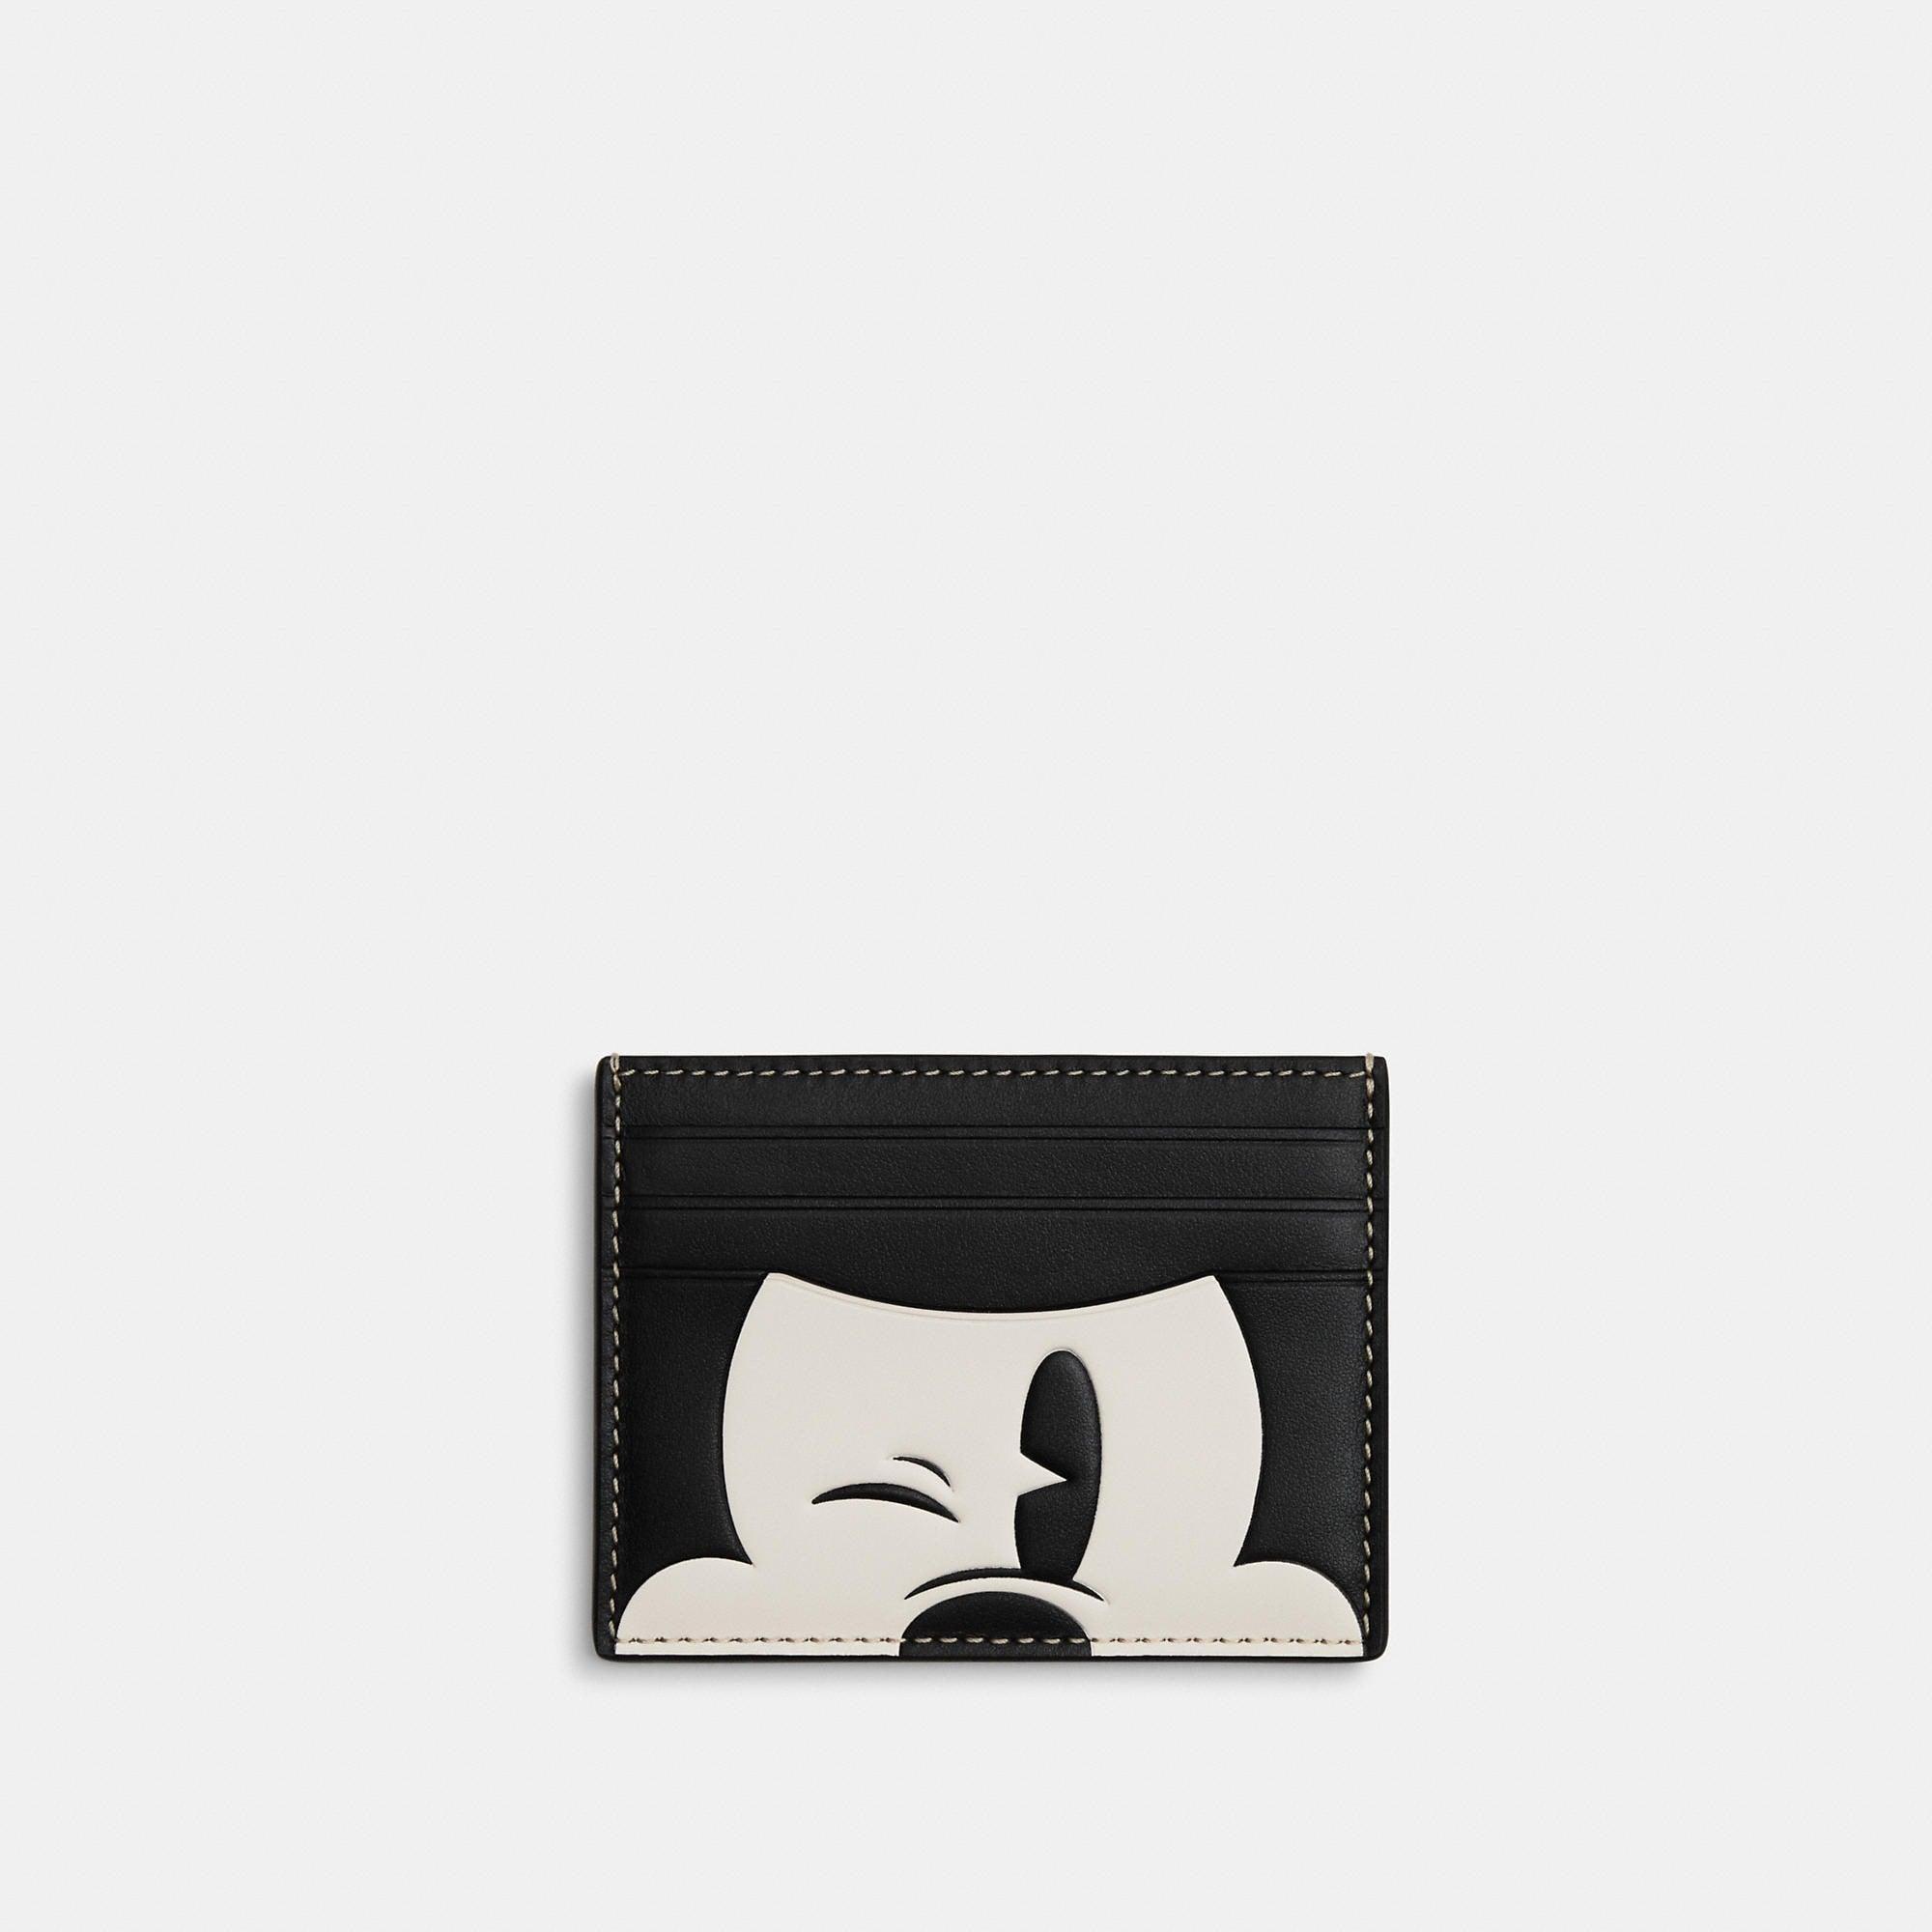 Accessories, Louis Vuitton X Disney Style Face Mask